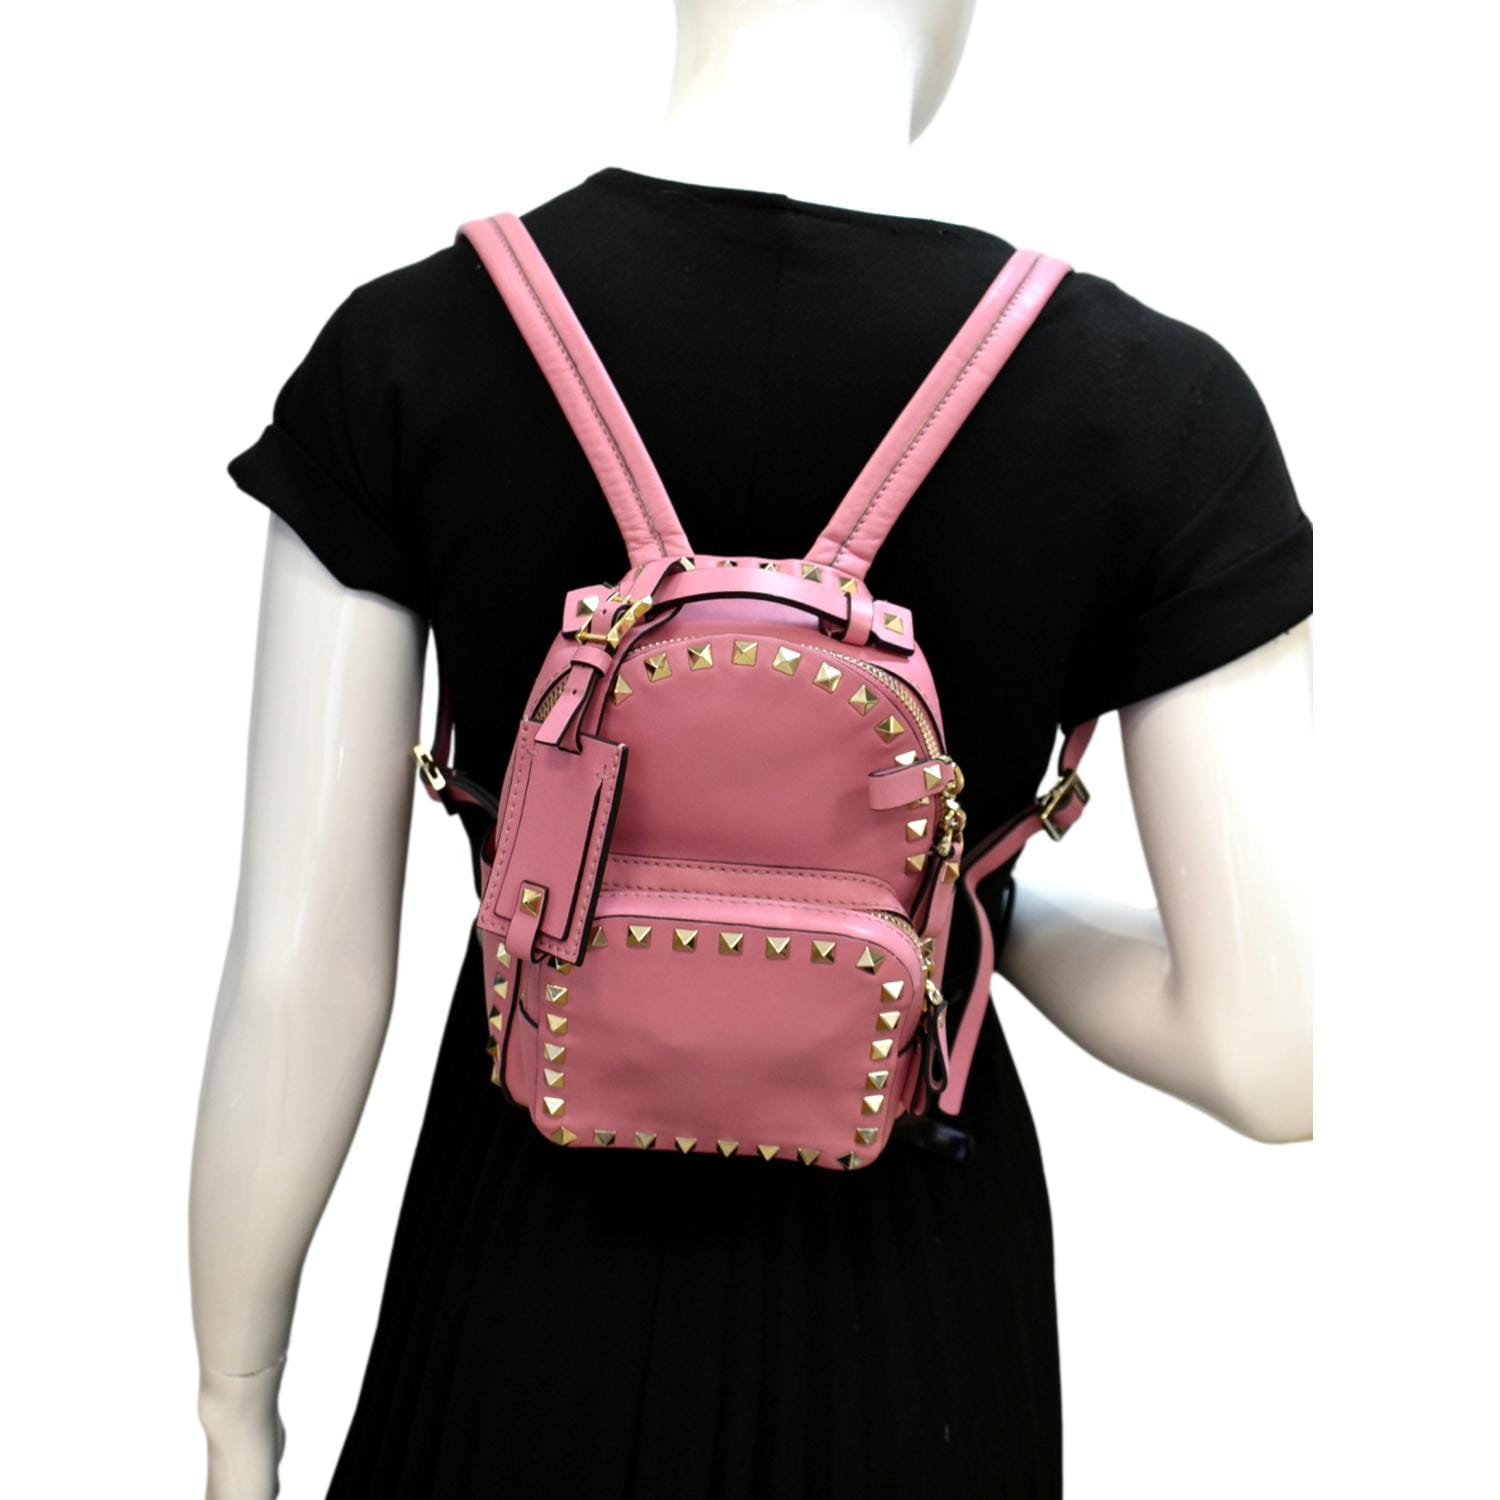 Women's Valentino Bags  Shop Women's Valentino Bags backpacks